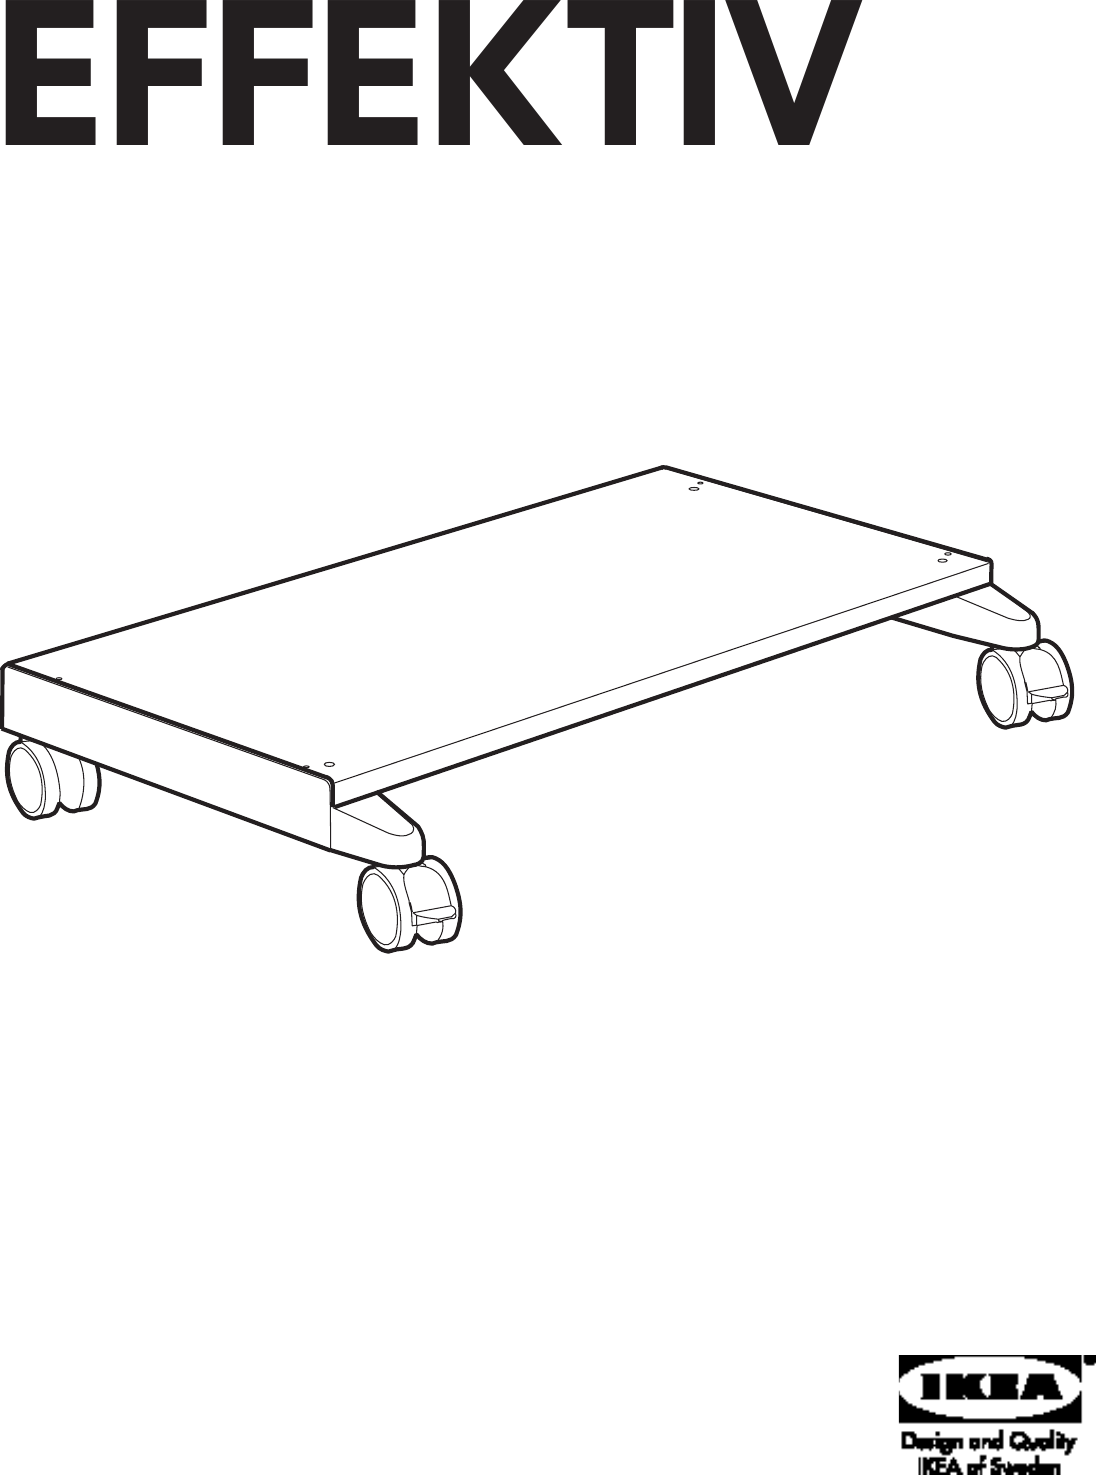 Page 1 of 4 - Ikea Ikea-Effektiv-Base-Casters-33-1-2-Assembly-Instruction